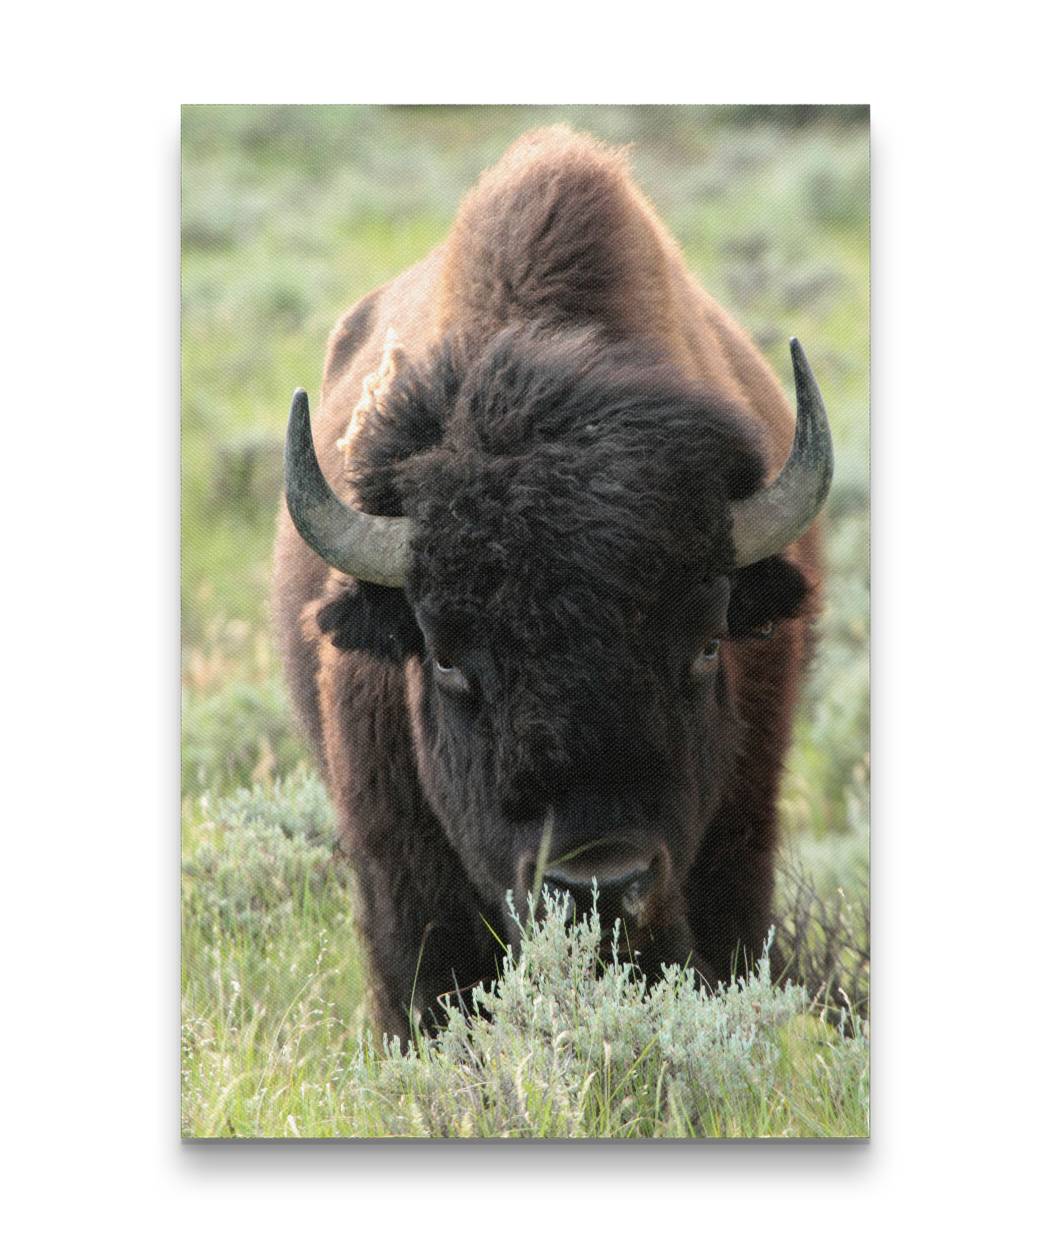 American Bison on Prairie, American Prairie Reserve, Montana